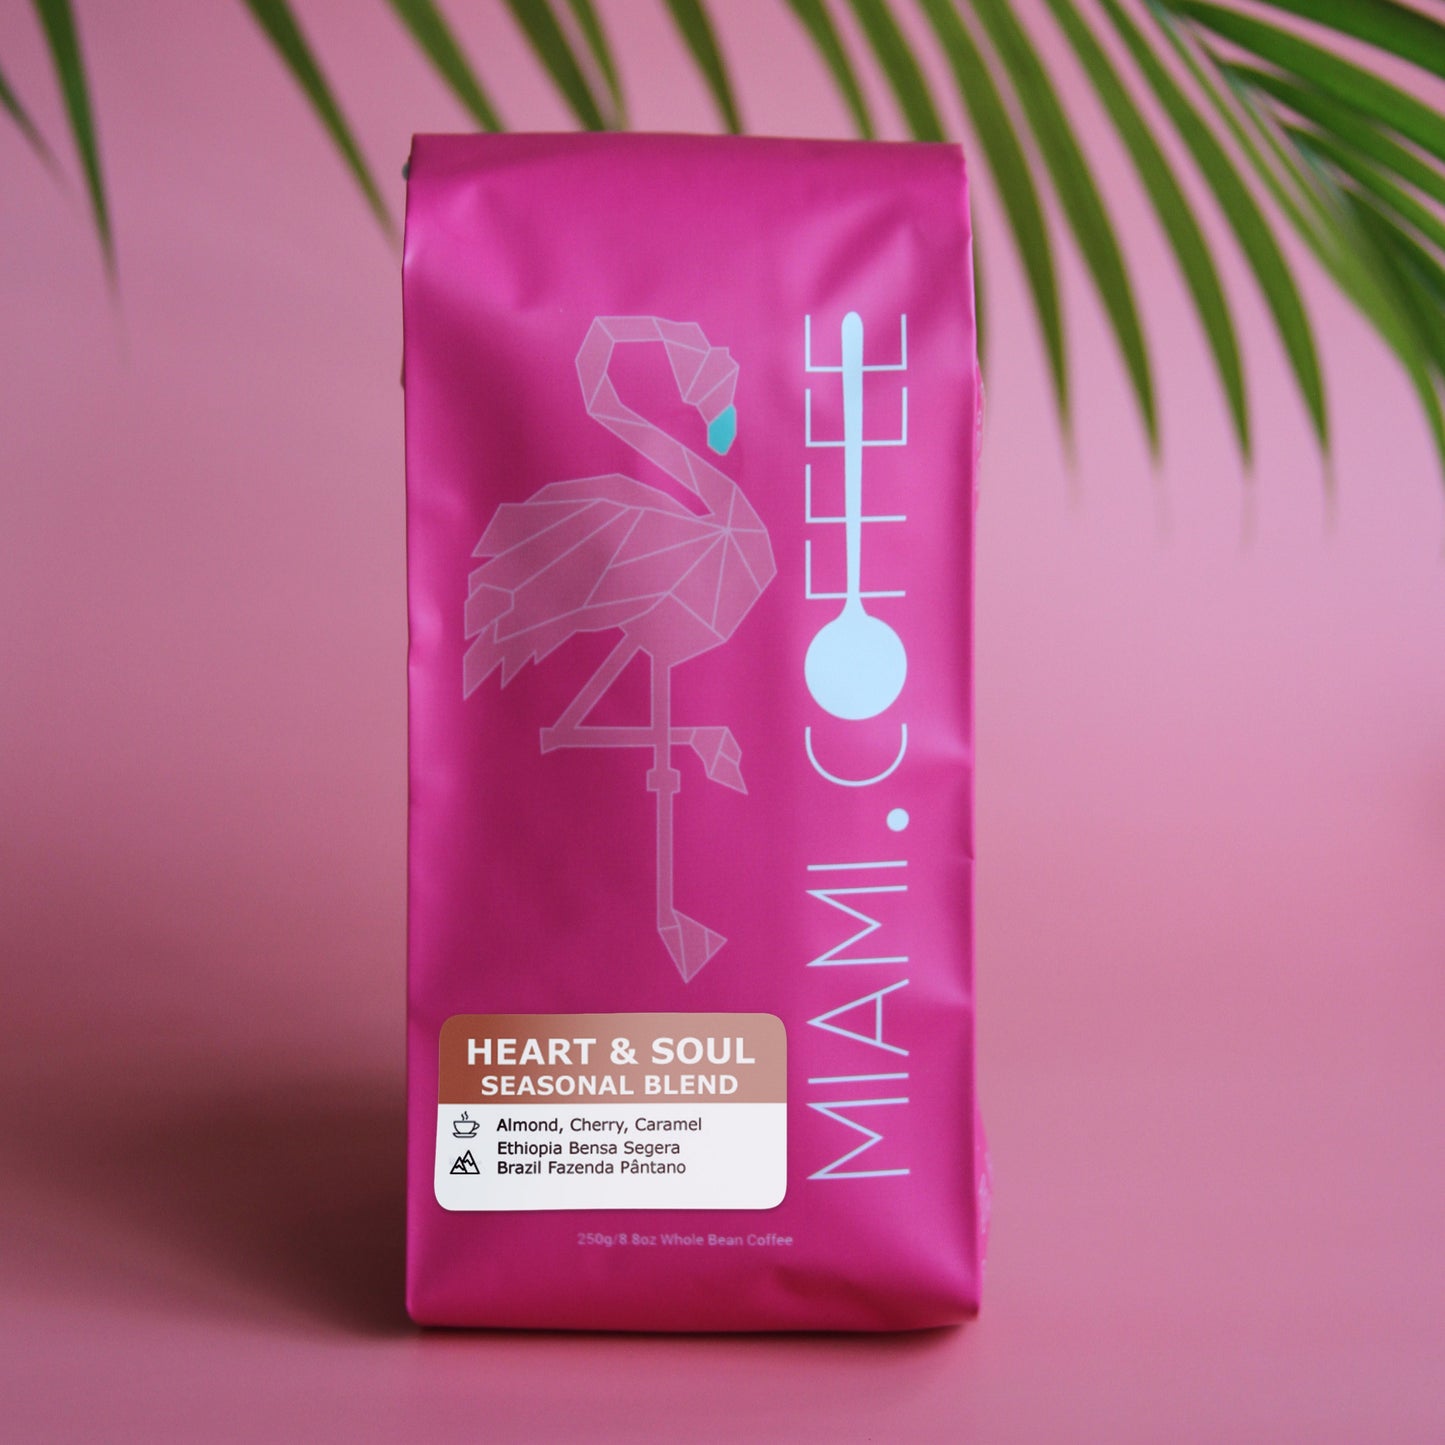 Miami (punto) Coffee Heart & Soul Mezcla de temporada, bolsa de 9 oz. Orígenes: Etiopía Bensa Segera y Brasil Fazenda Pântano. Descriptores de sabor: almendra, cereza, caramelo